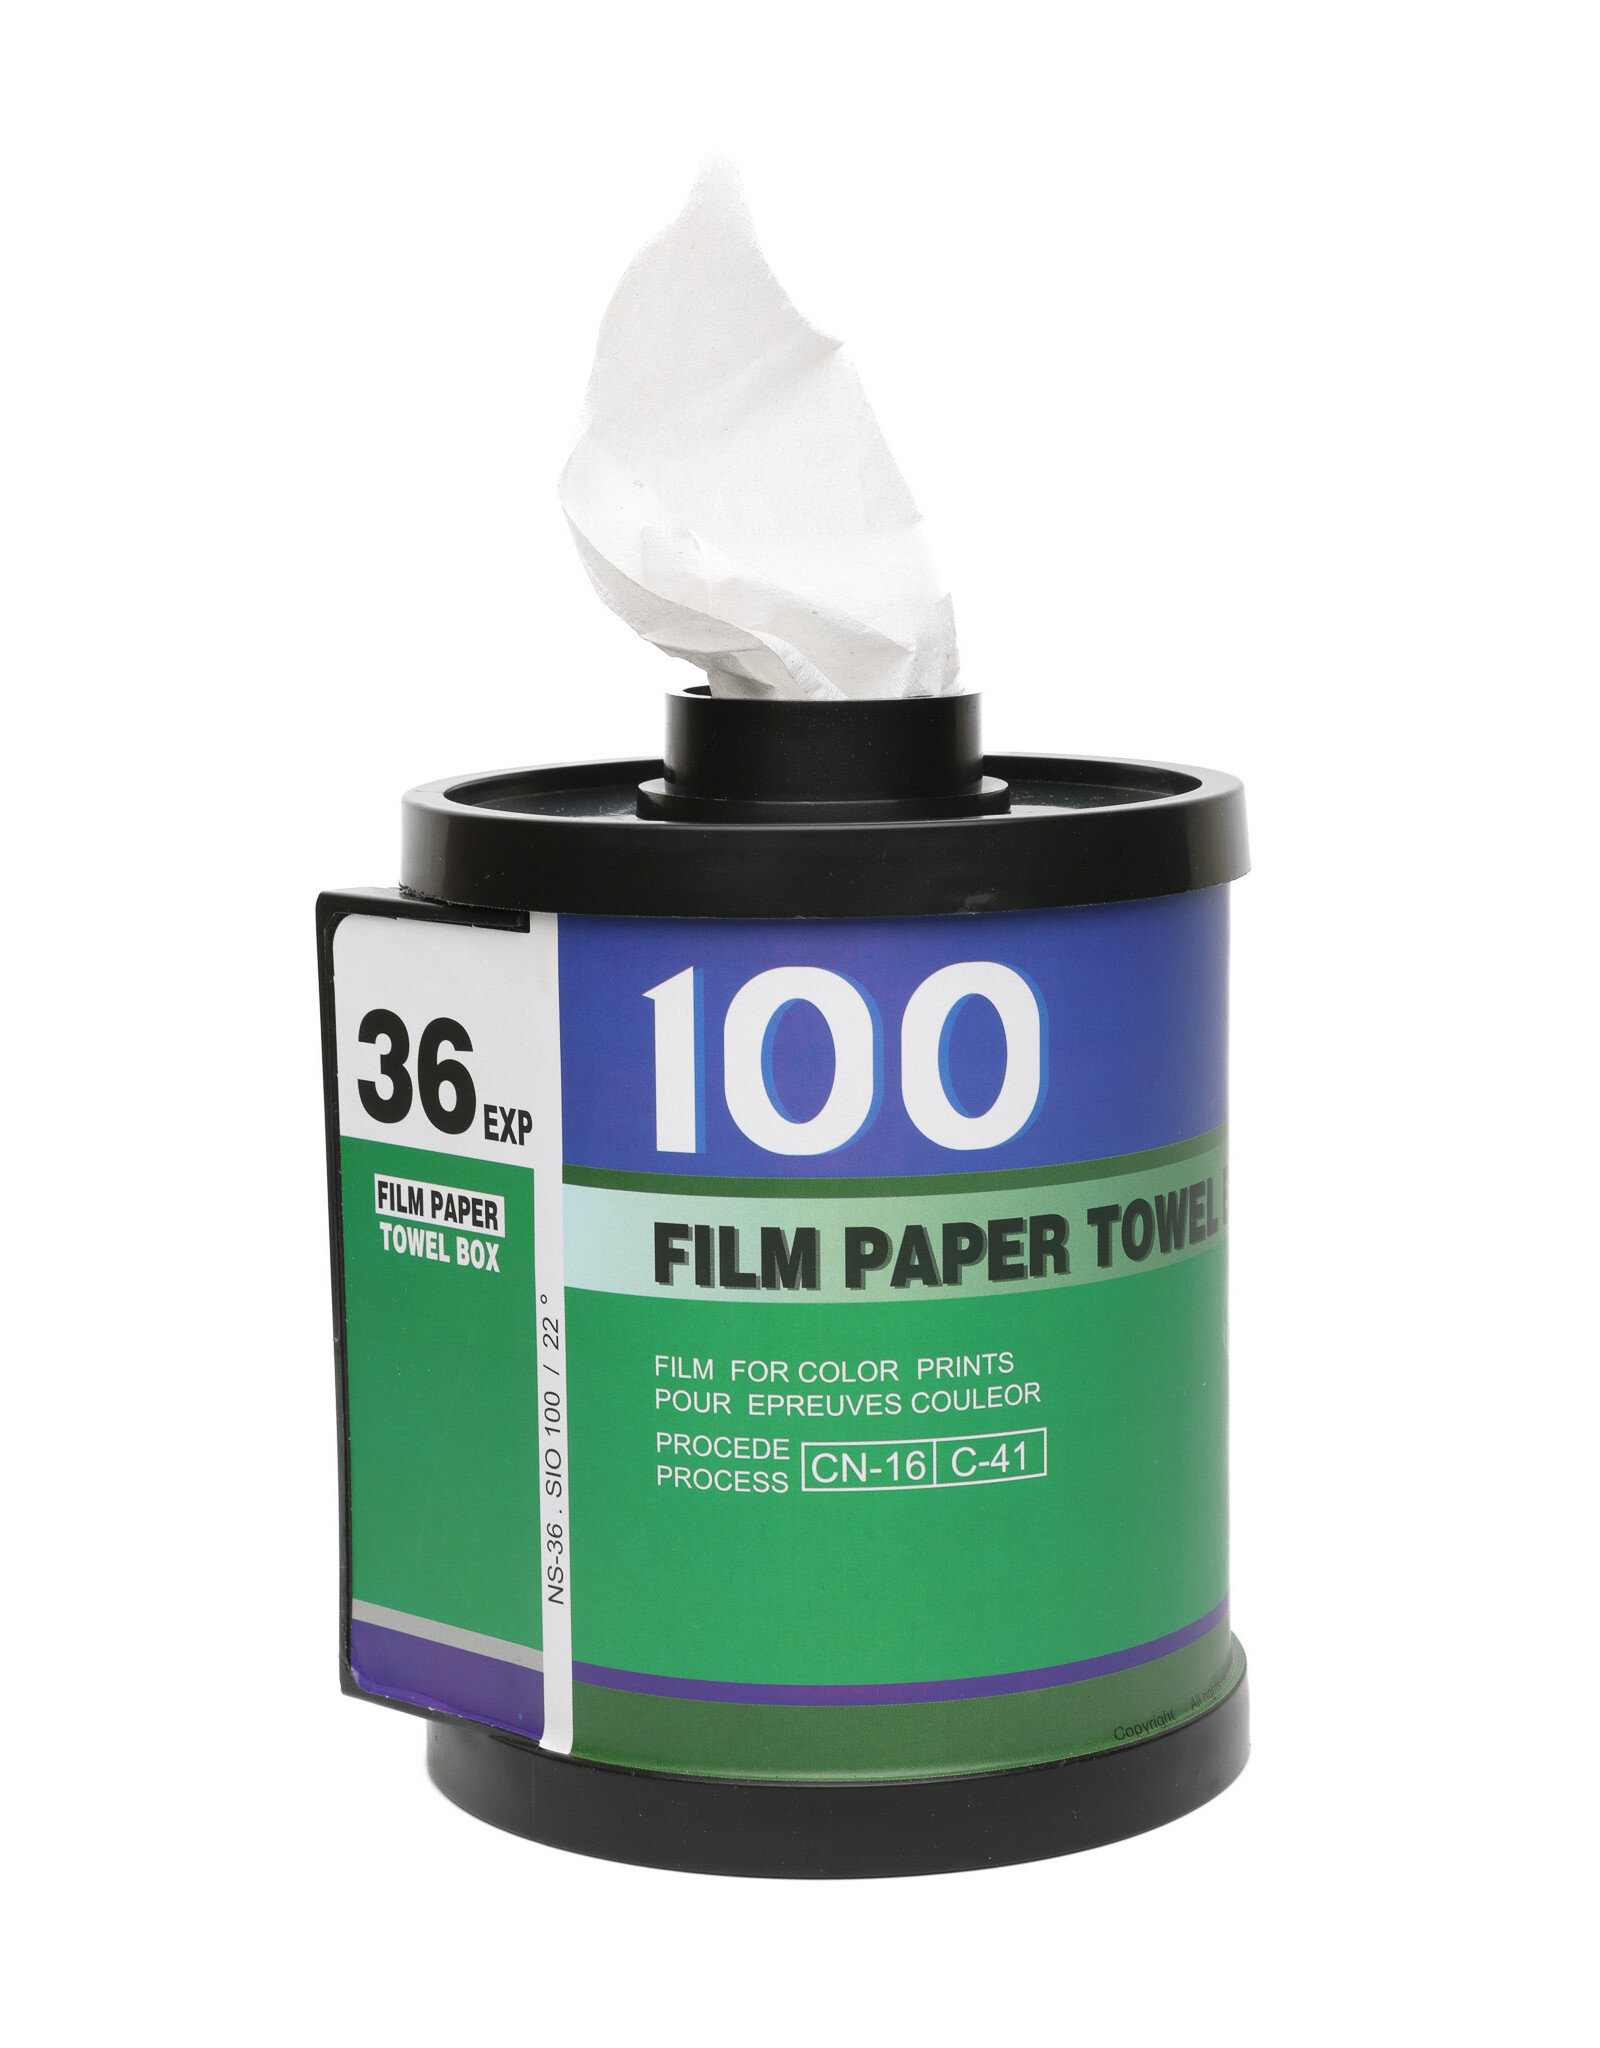 Film Roll Tissue Box Holder